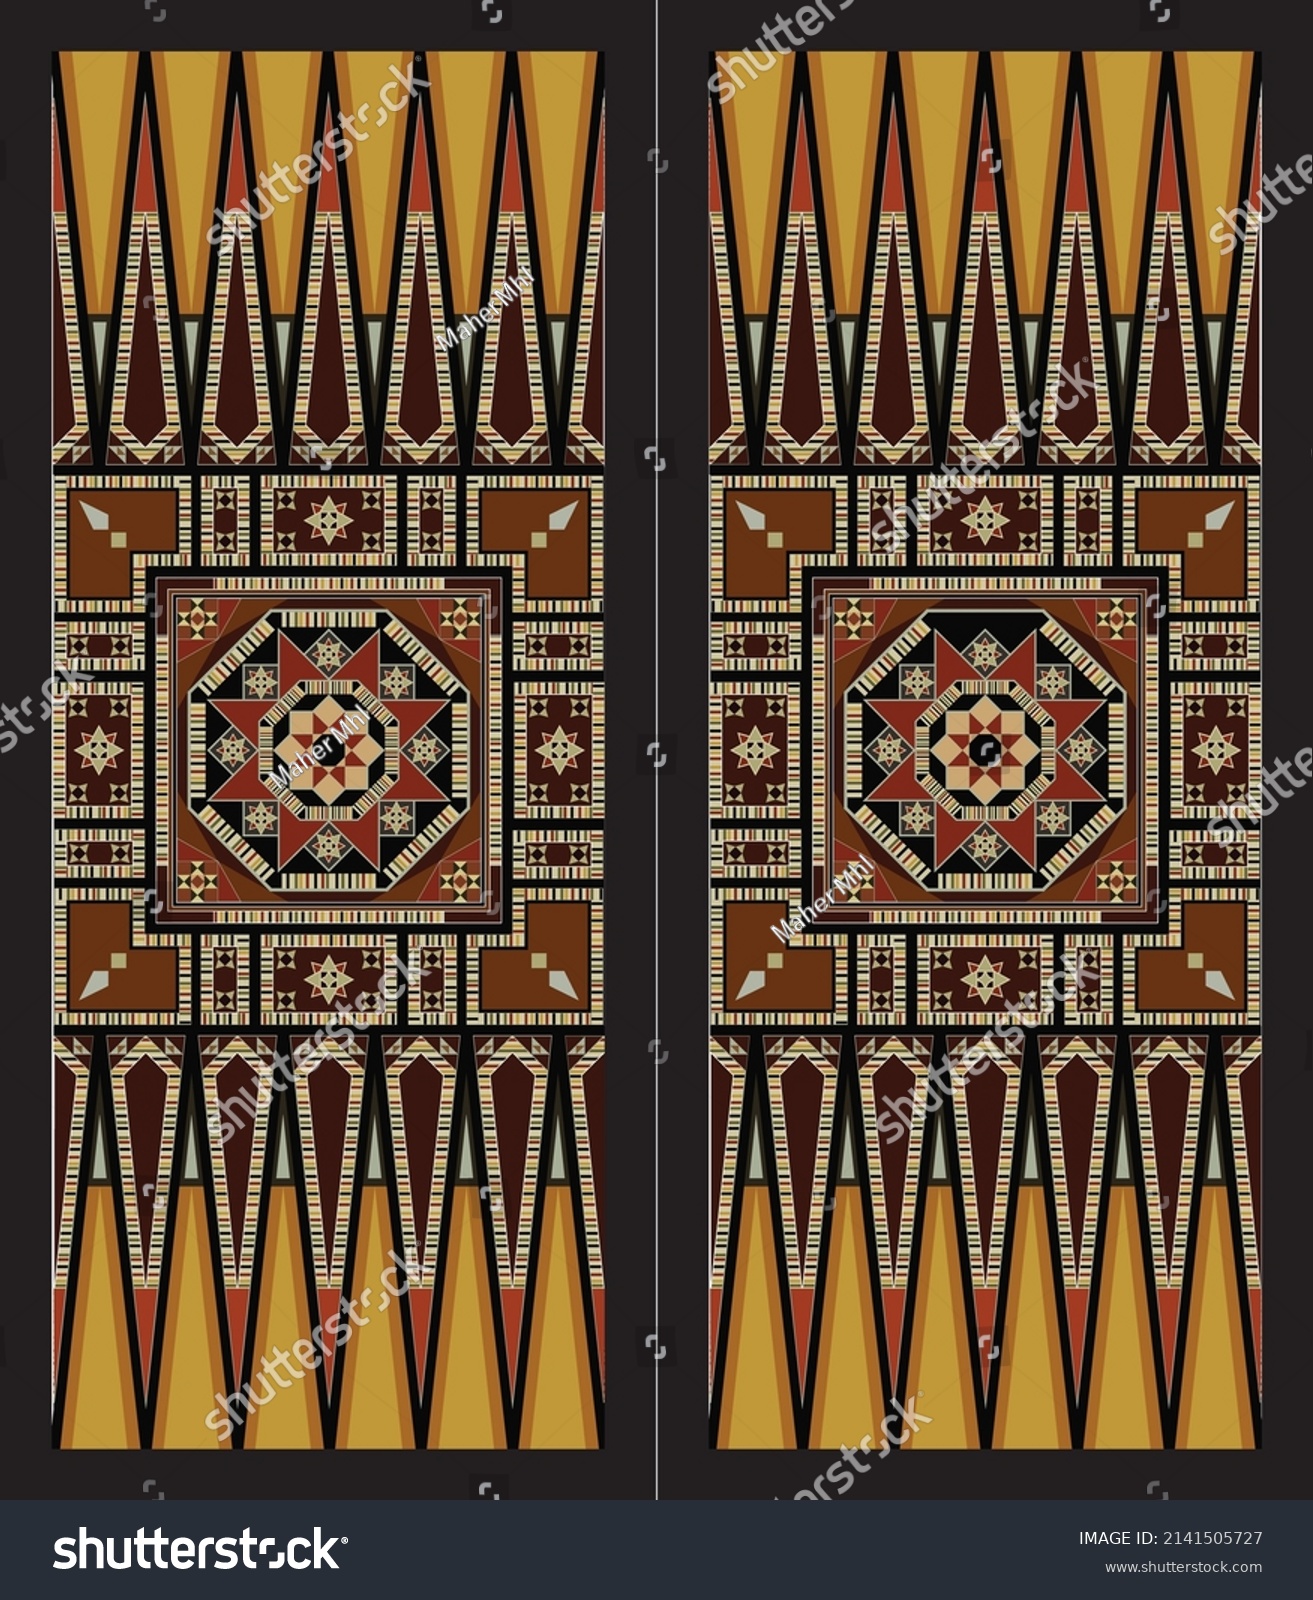 SVG of Wooden mosaic backgammon board game vector illustration. Backgammon table svg